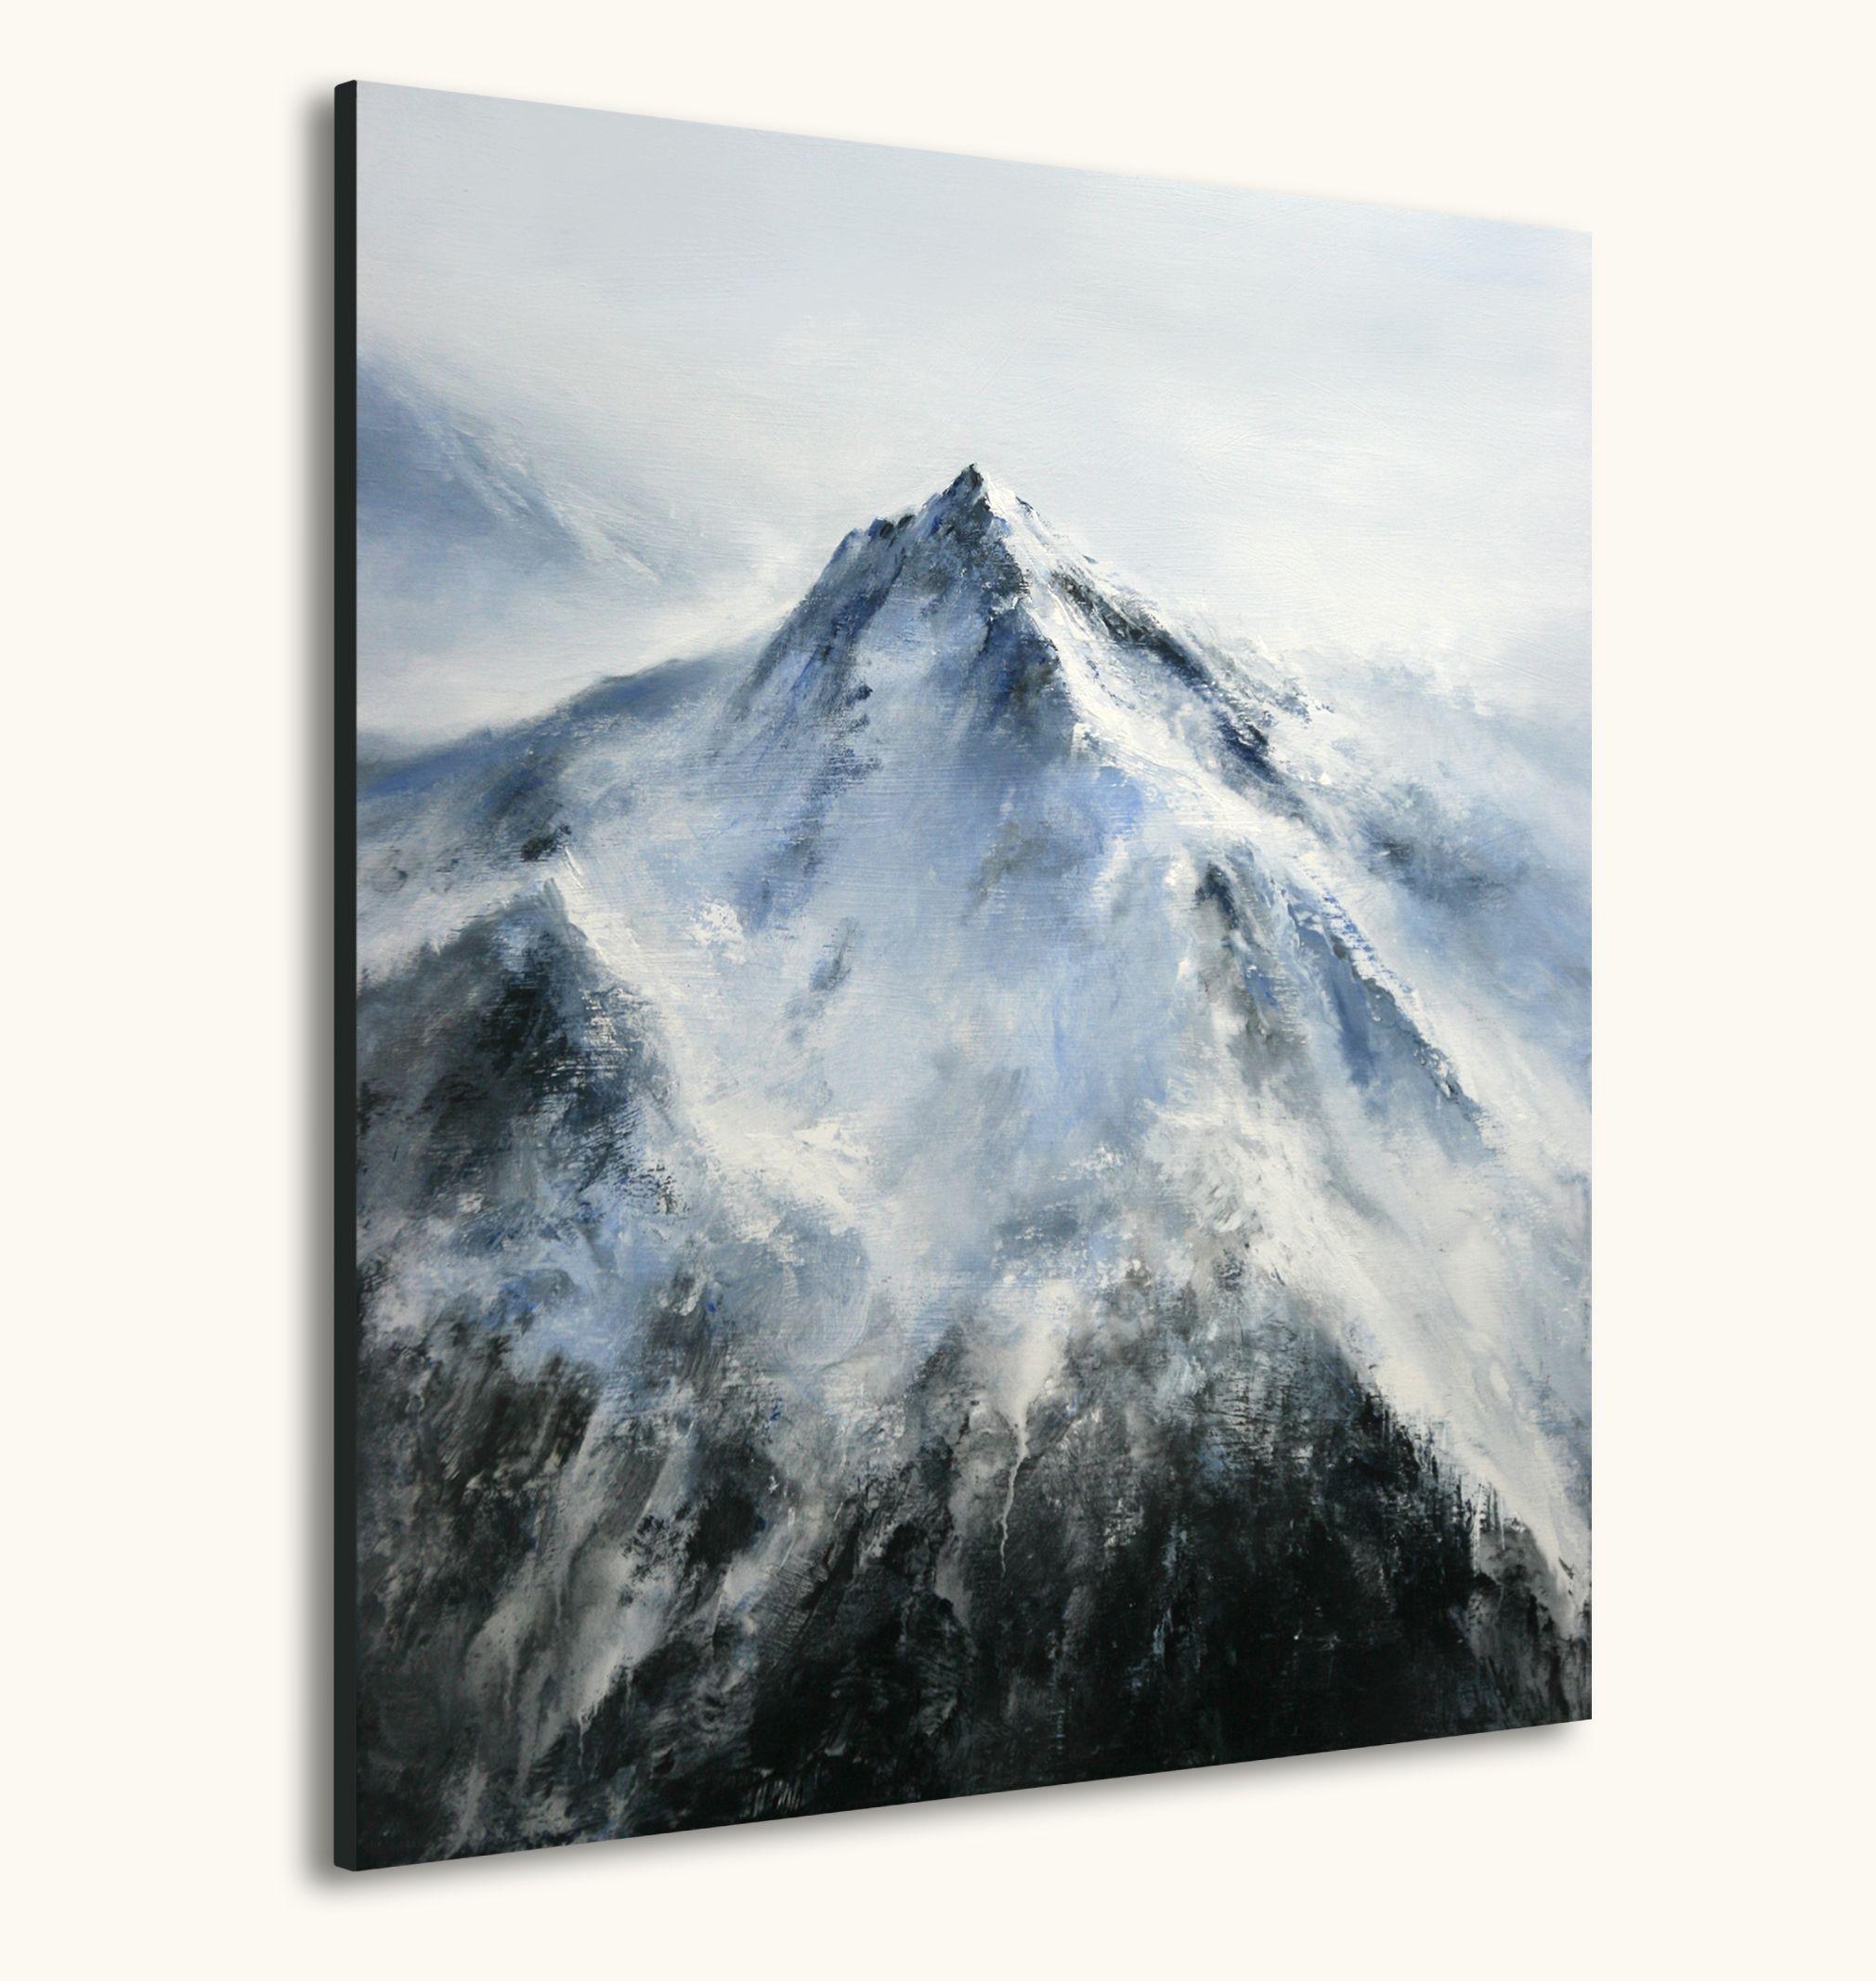 Alpine Mountain, Painting, Acrylic on Canvas 1